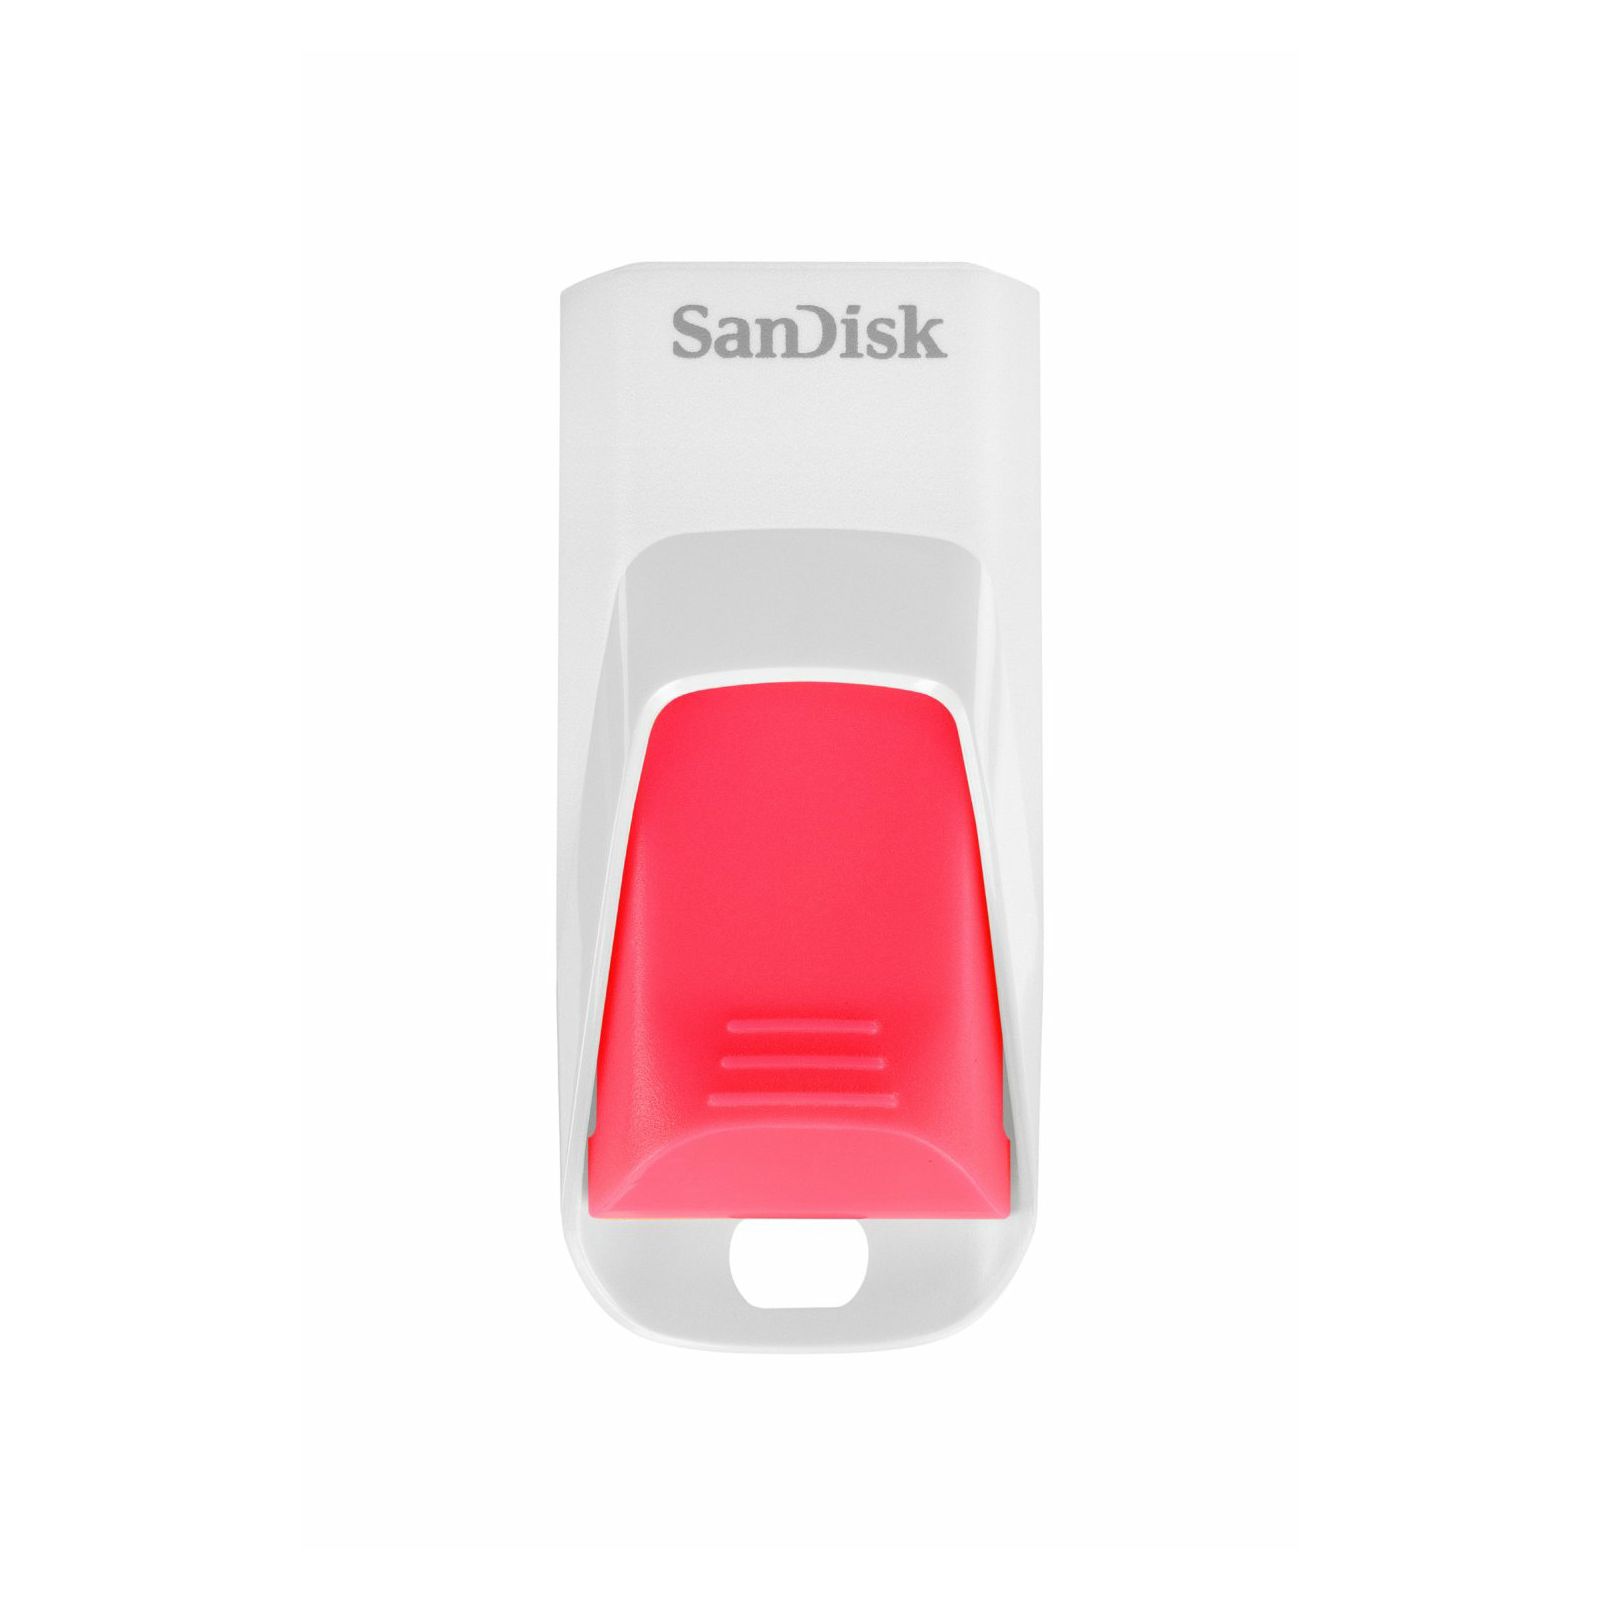 SanDisk Cruzer Edge 8GB White/Pink SDCZ51W-008G-B35P USB Memory Stick